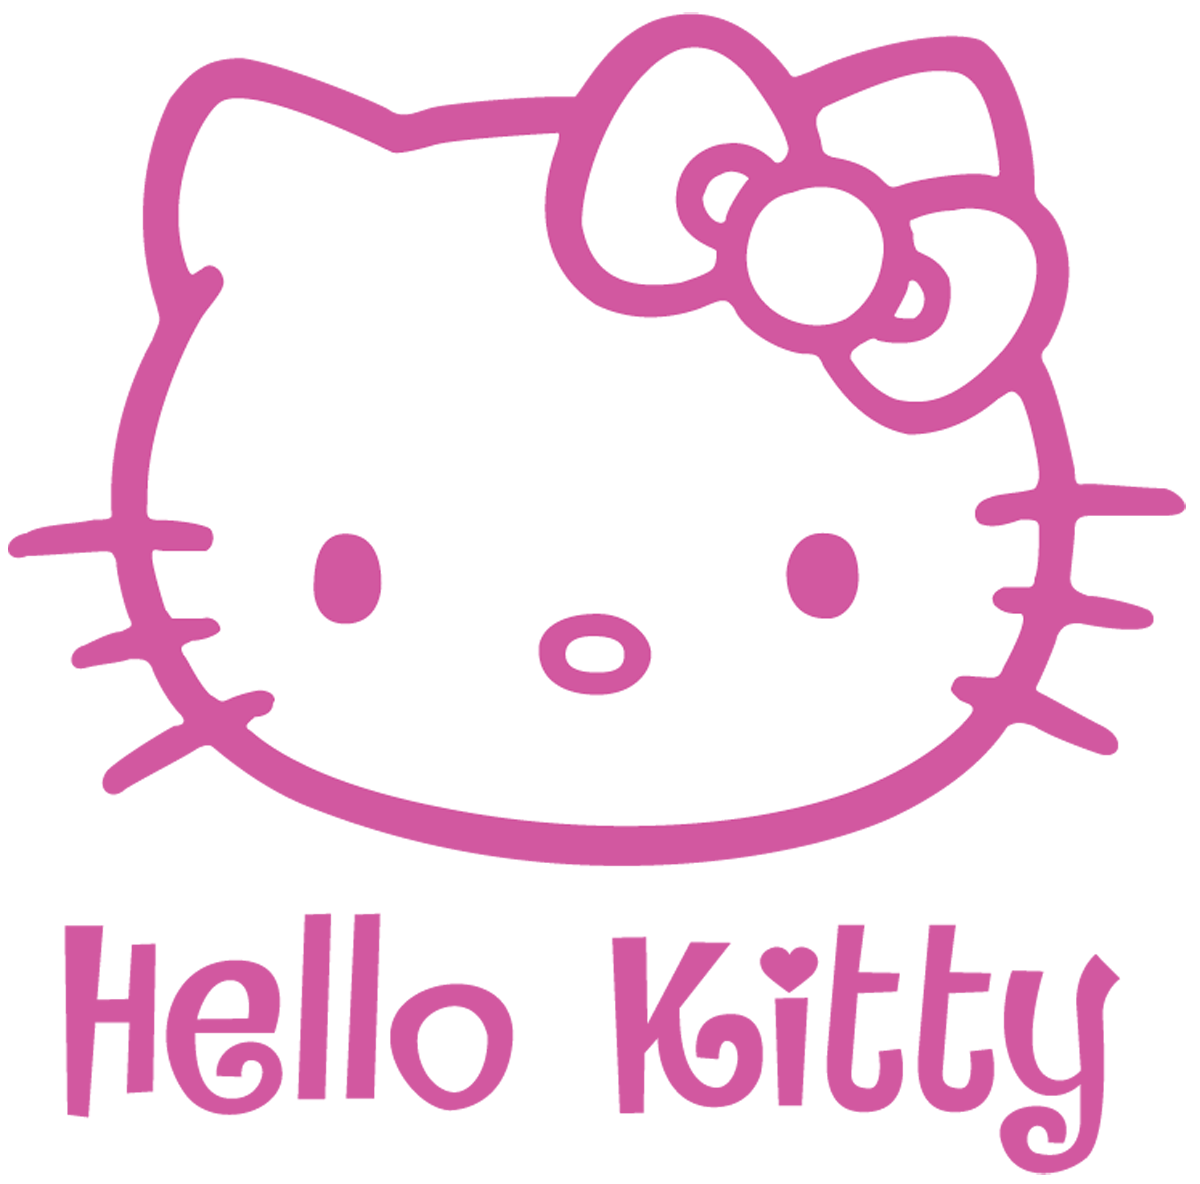 Download Wallpaper Hello Kitty Terbaru Wallpaper.Com